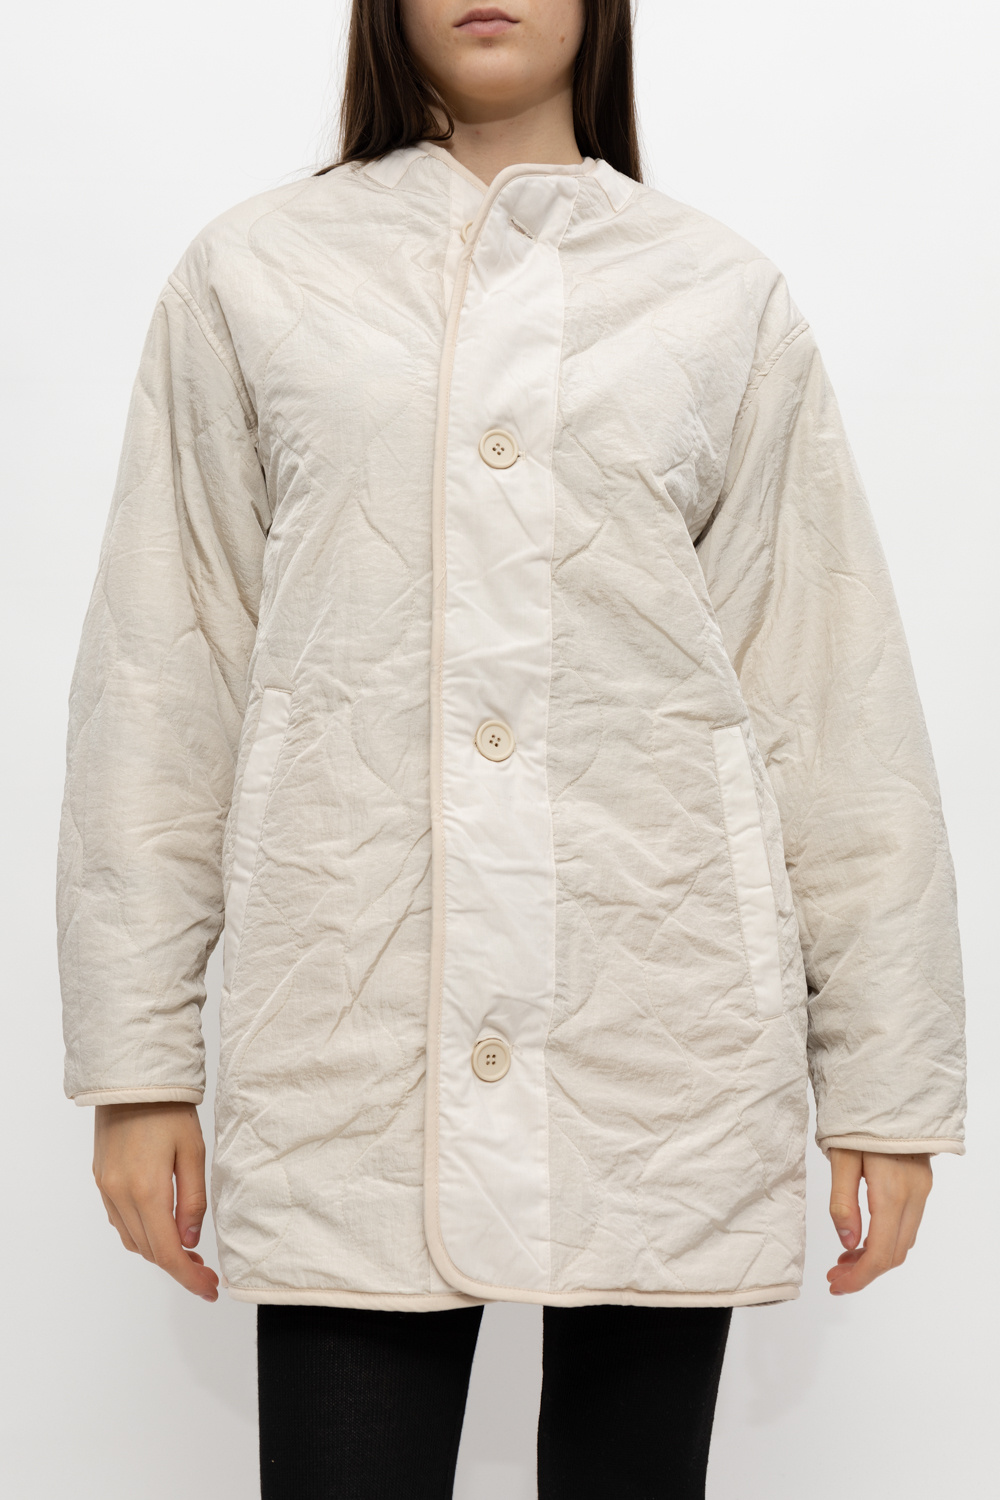 Polaire Crew Sweat-shirt Homme 'Himemma’ reversible jacket